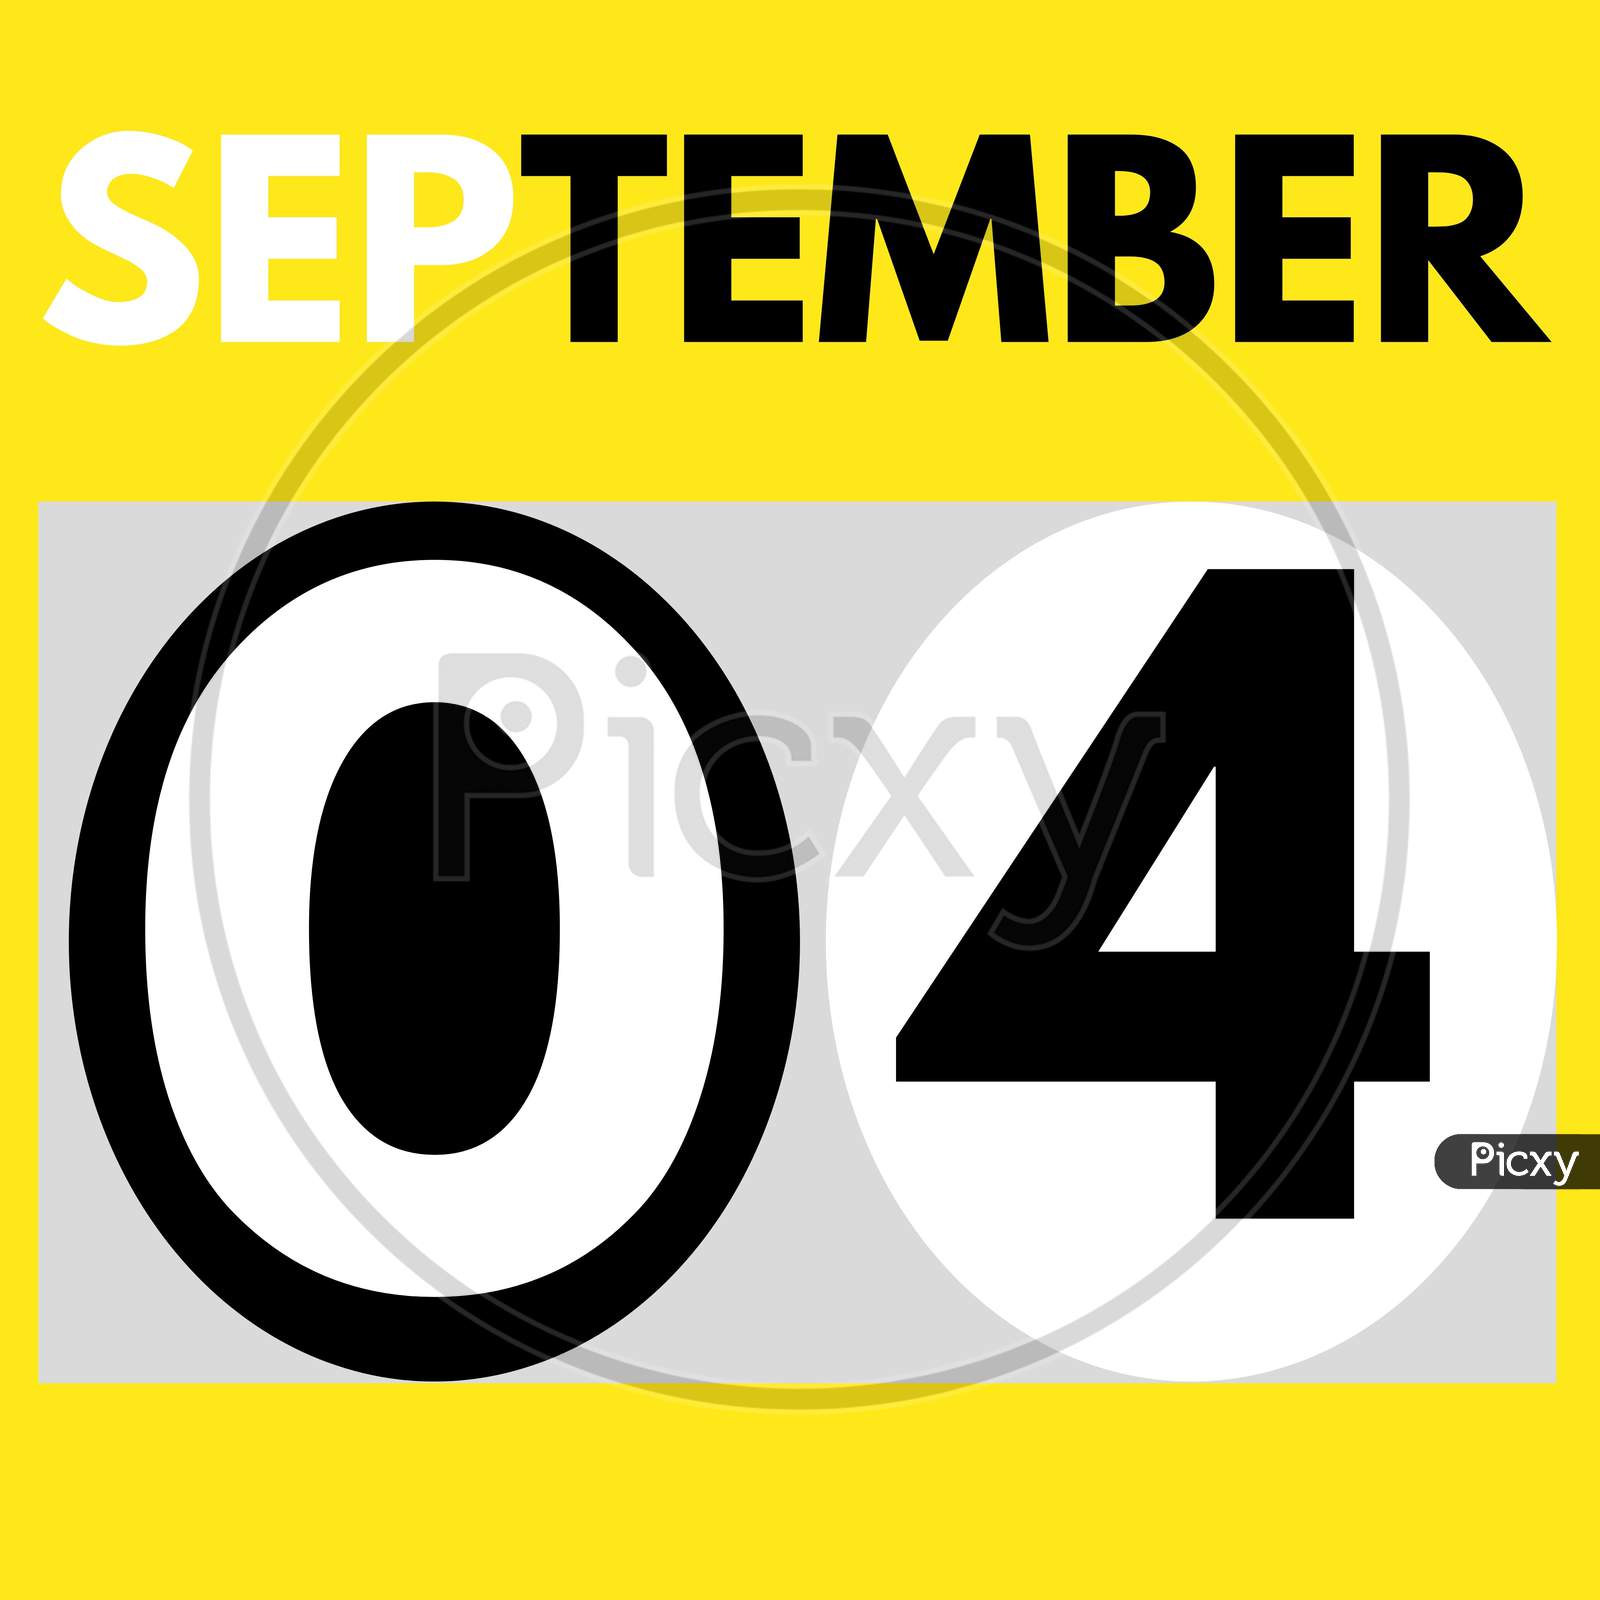 September 4 . Modern Daily Calendar Icon .Date ,Day, Month .Calendar For The Month Of September